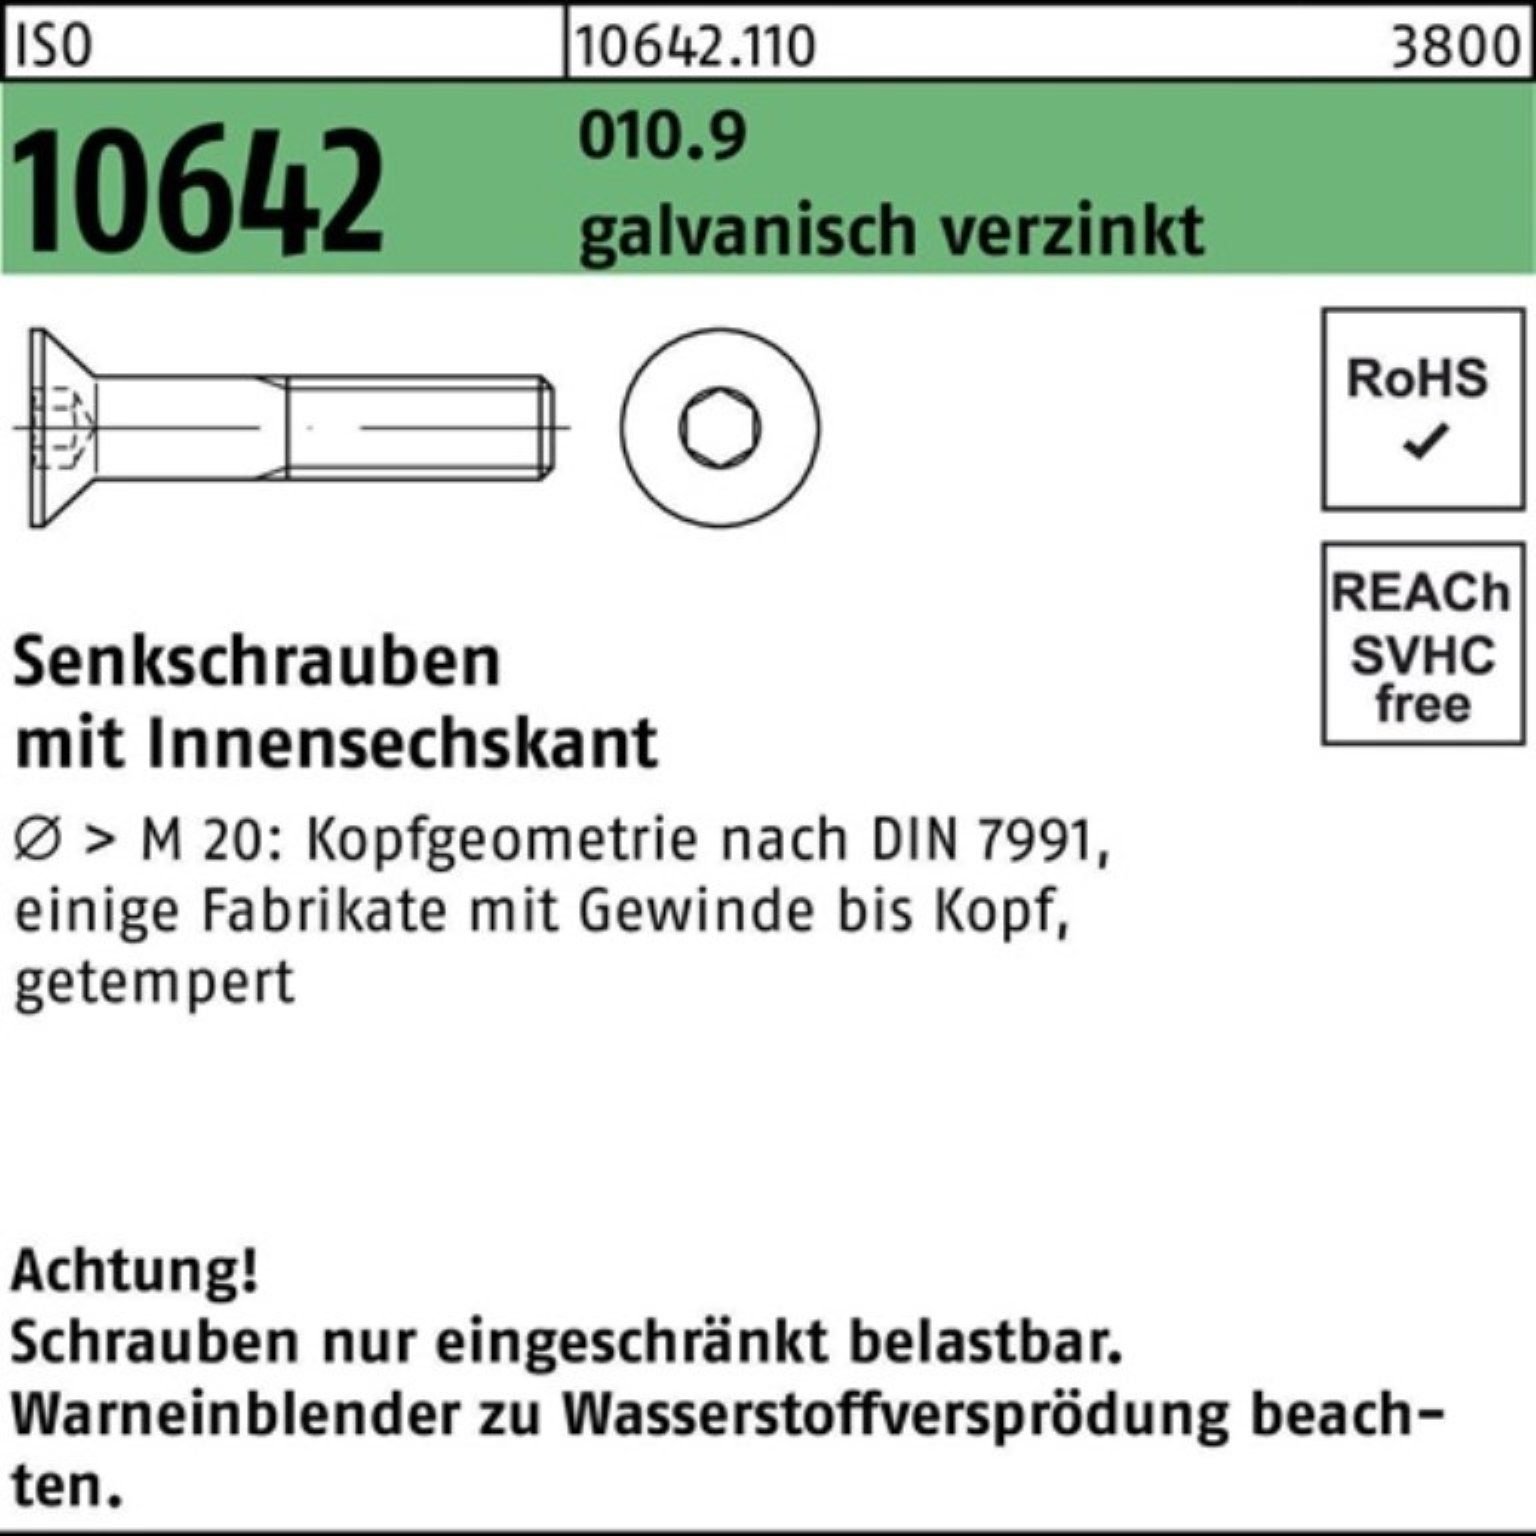 Reyher Senkschraube 200er Pack Senkschraube ISO 10642 Innen-6kt M8x 35 010.9 galv.verz. 20